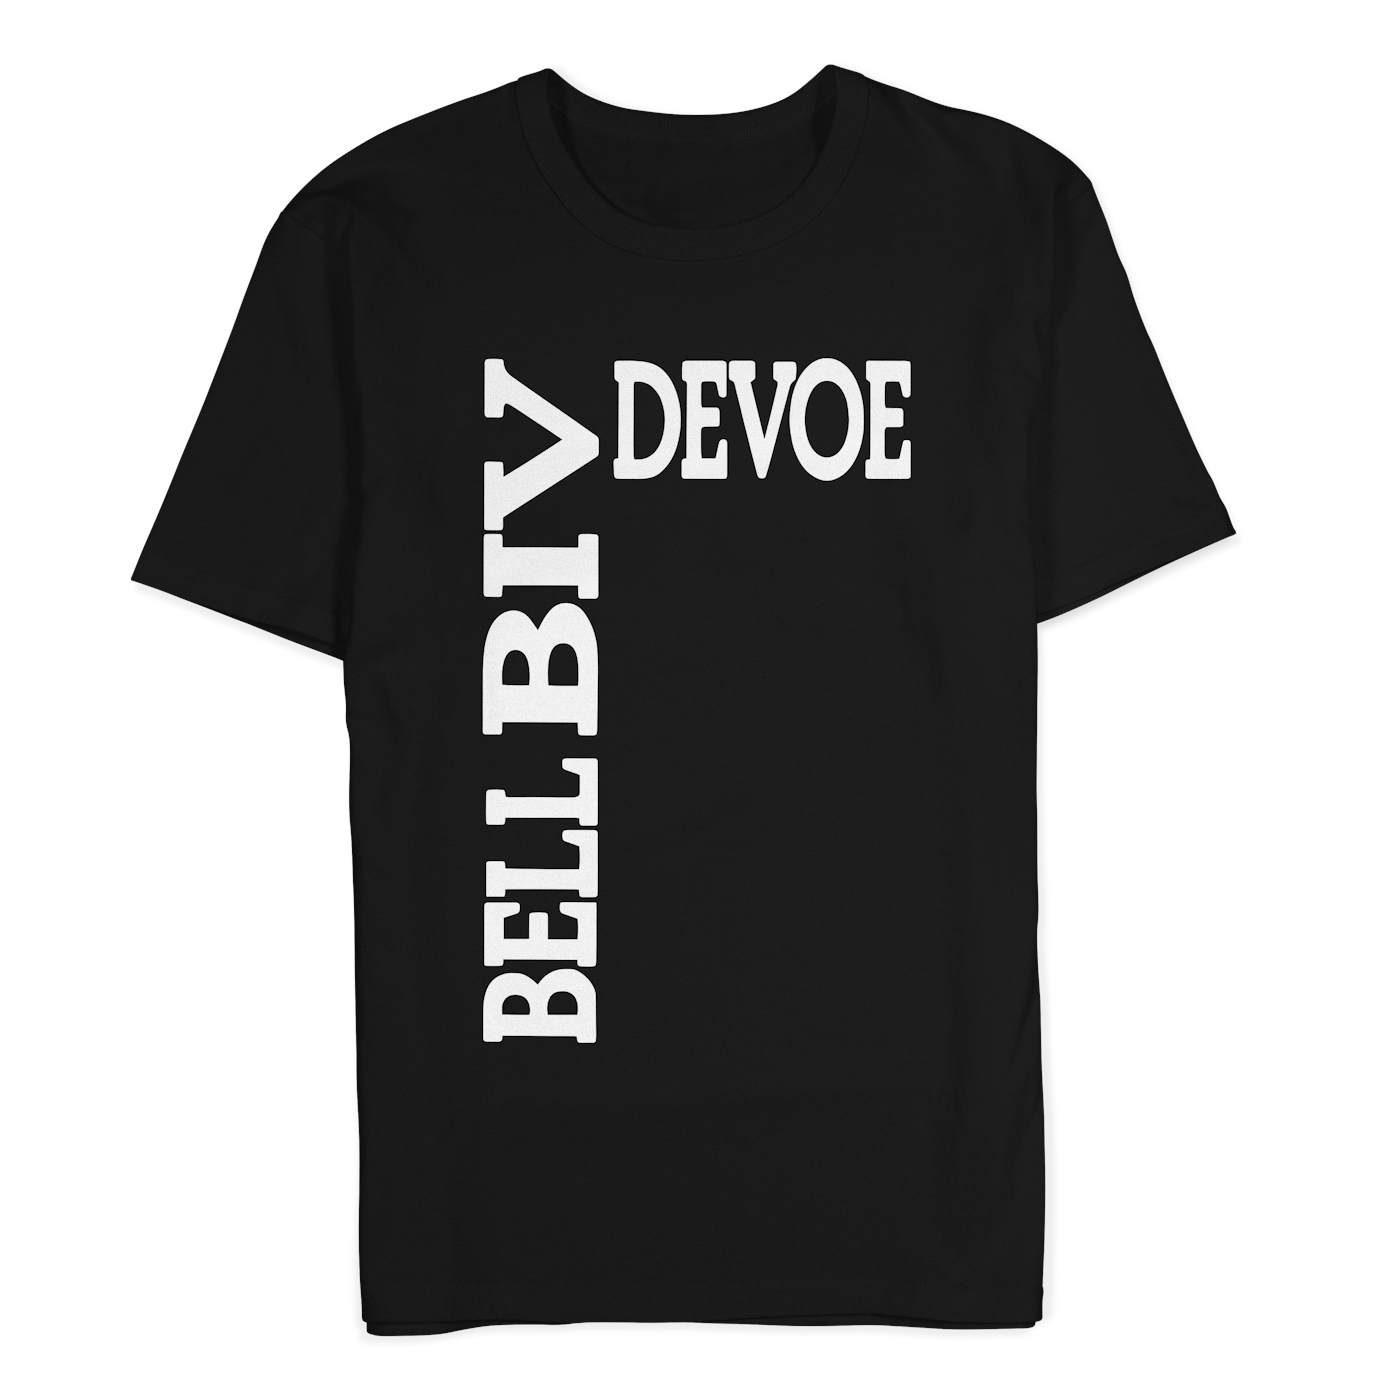 Bell Biv DeVoe Logo T-Shirt